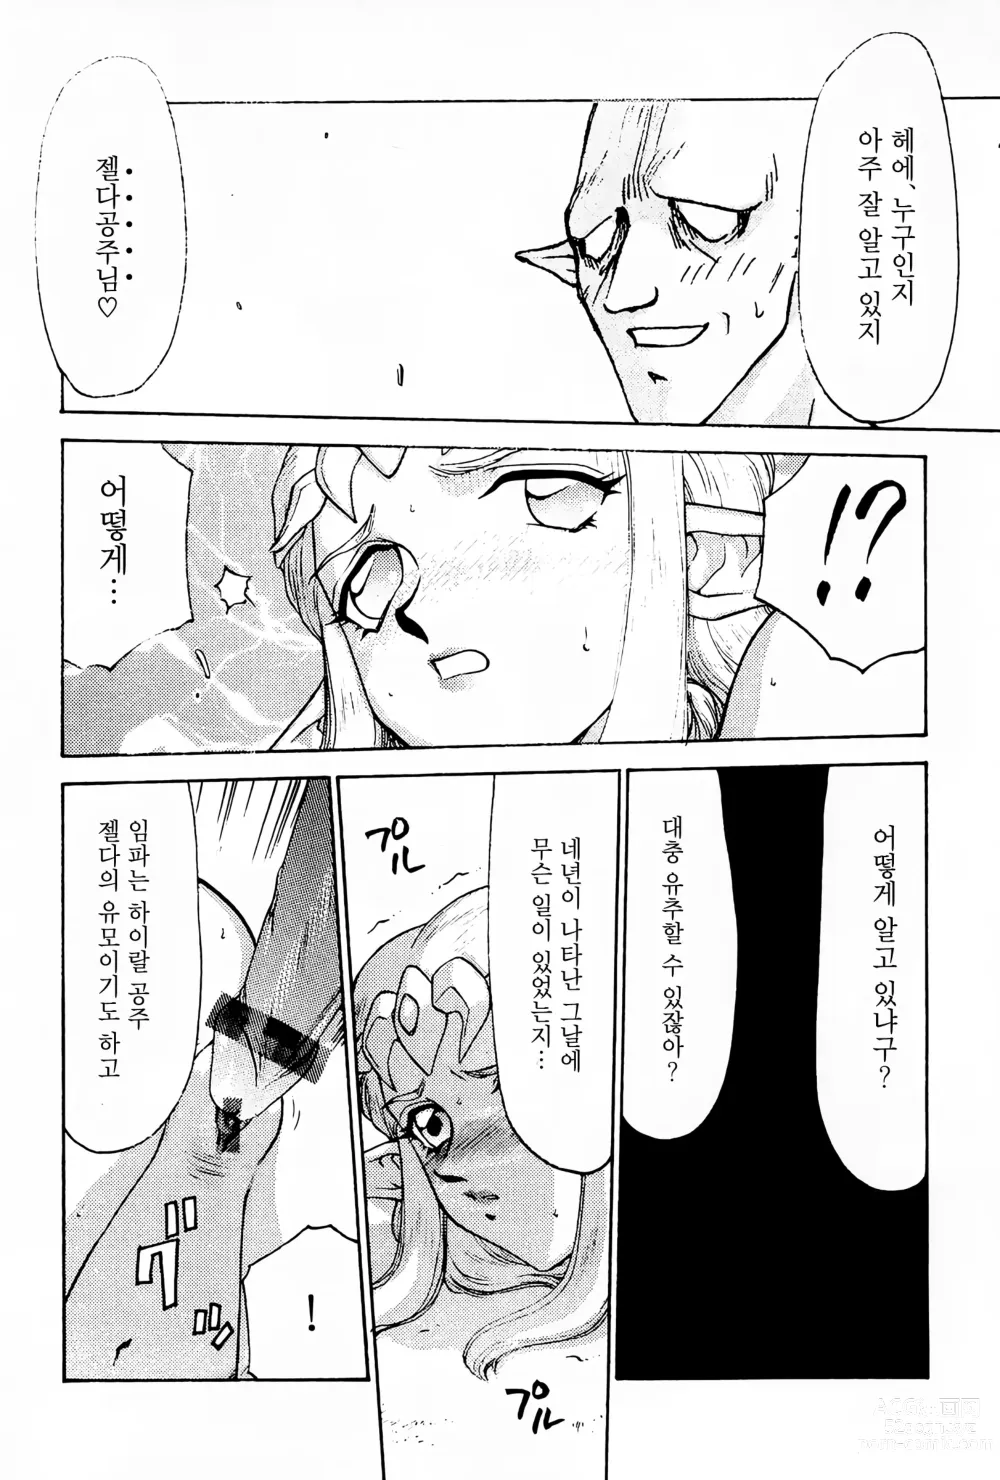 Page 17 of doujinshi NISE Zelda no Densetsu Prologue